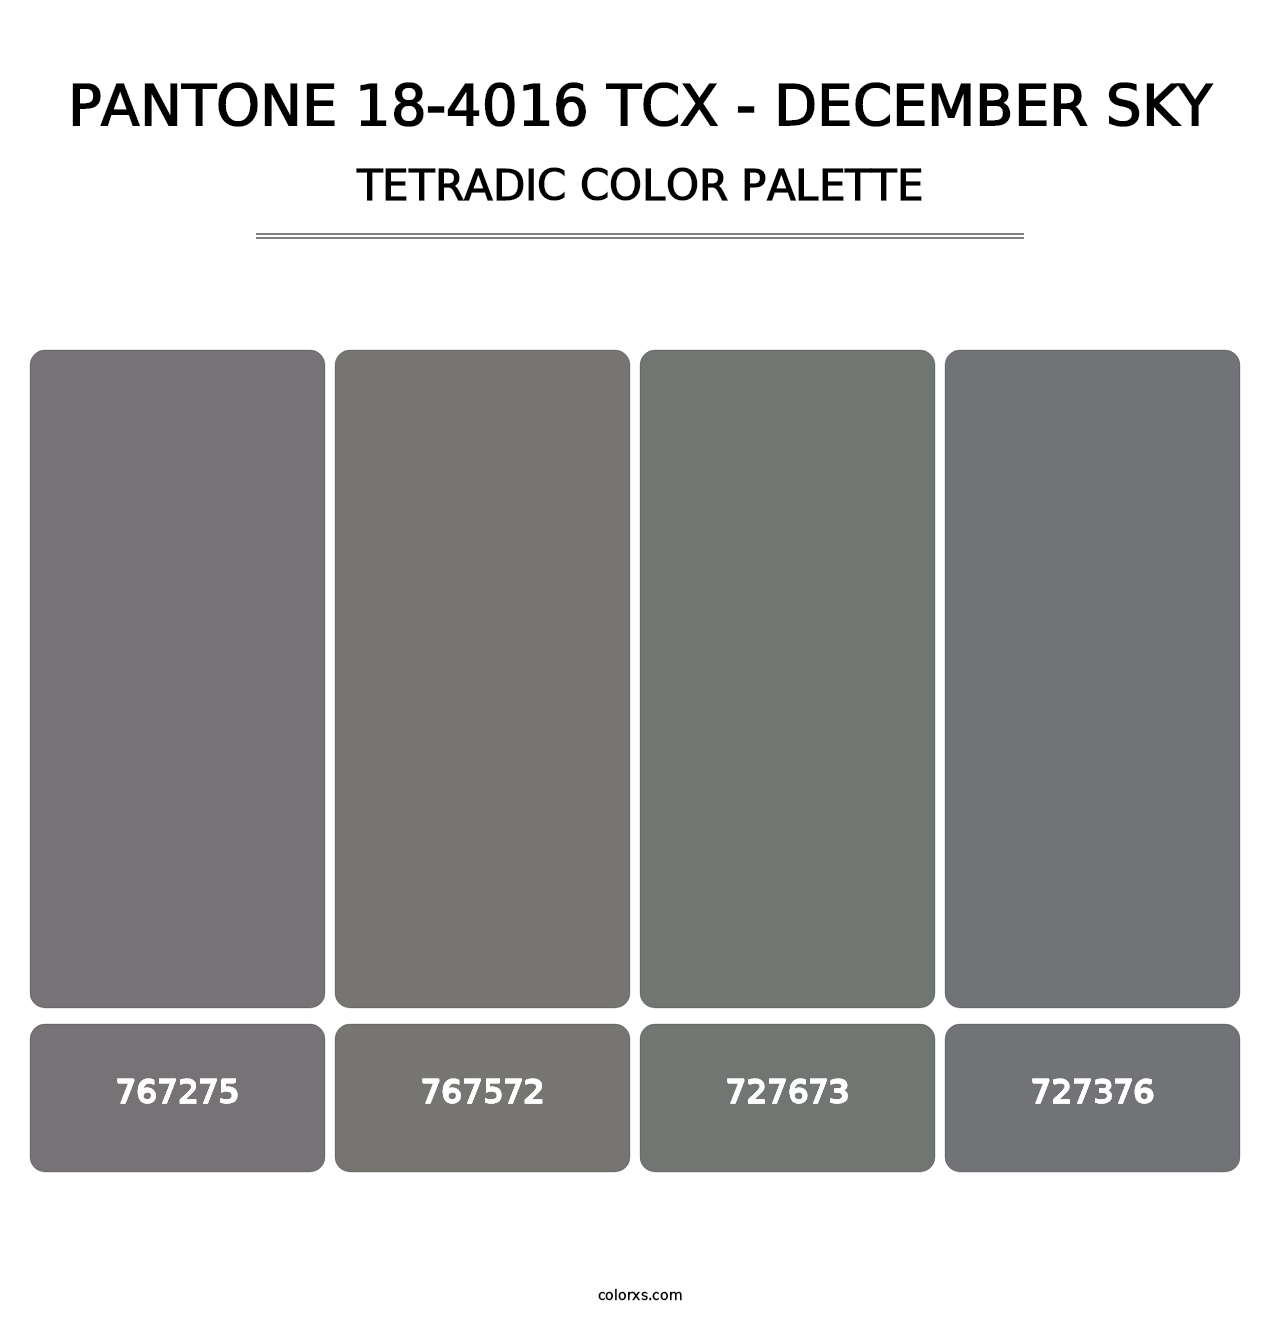 PANTONE 18-4016 TCX - December Sky - Tetradic Color Palette